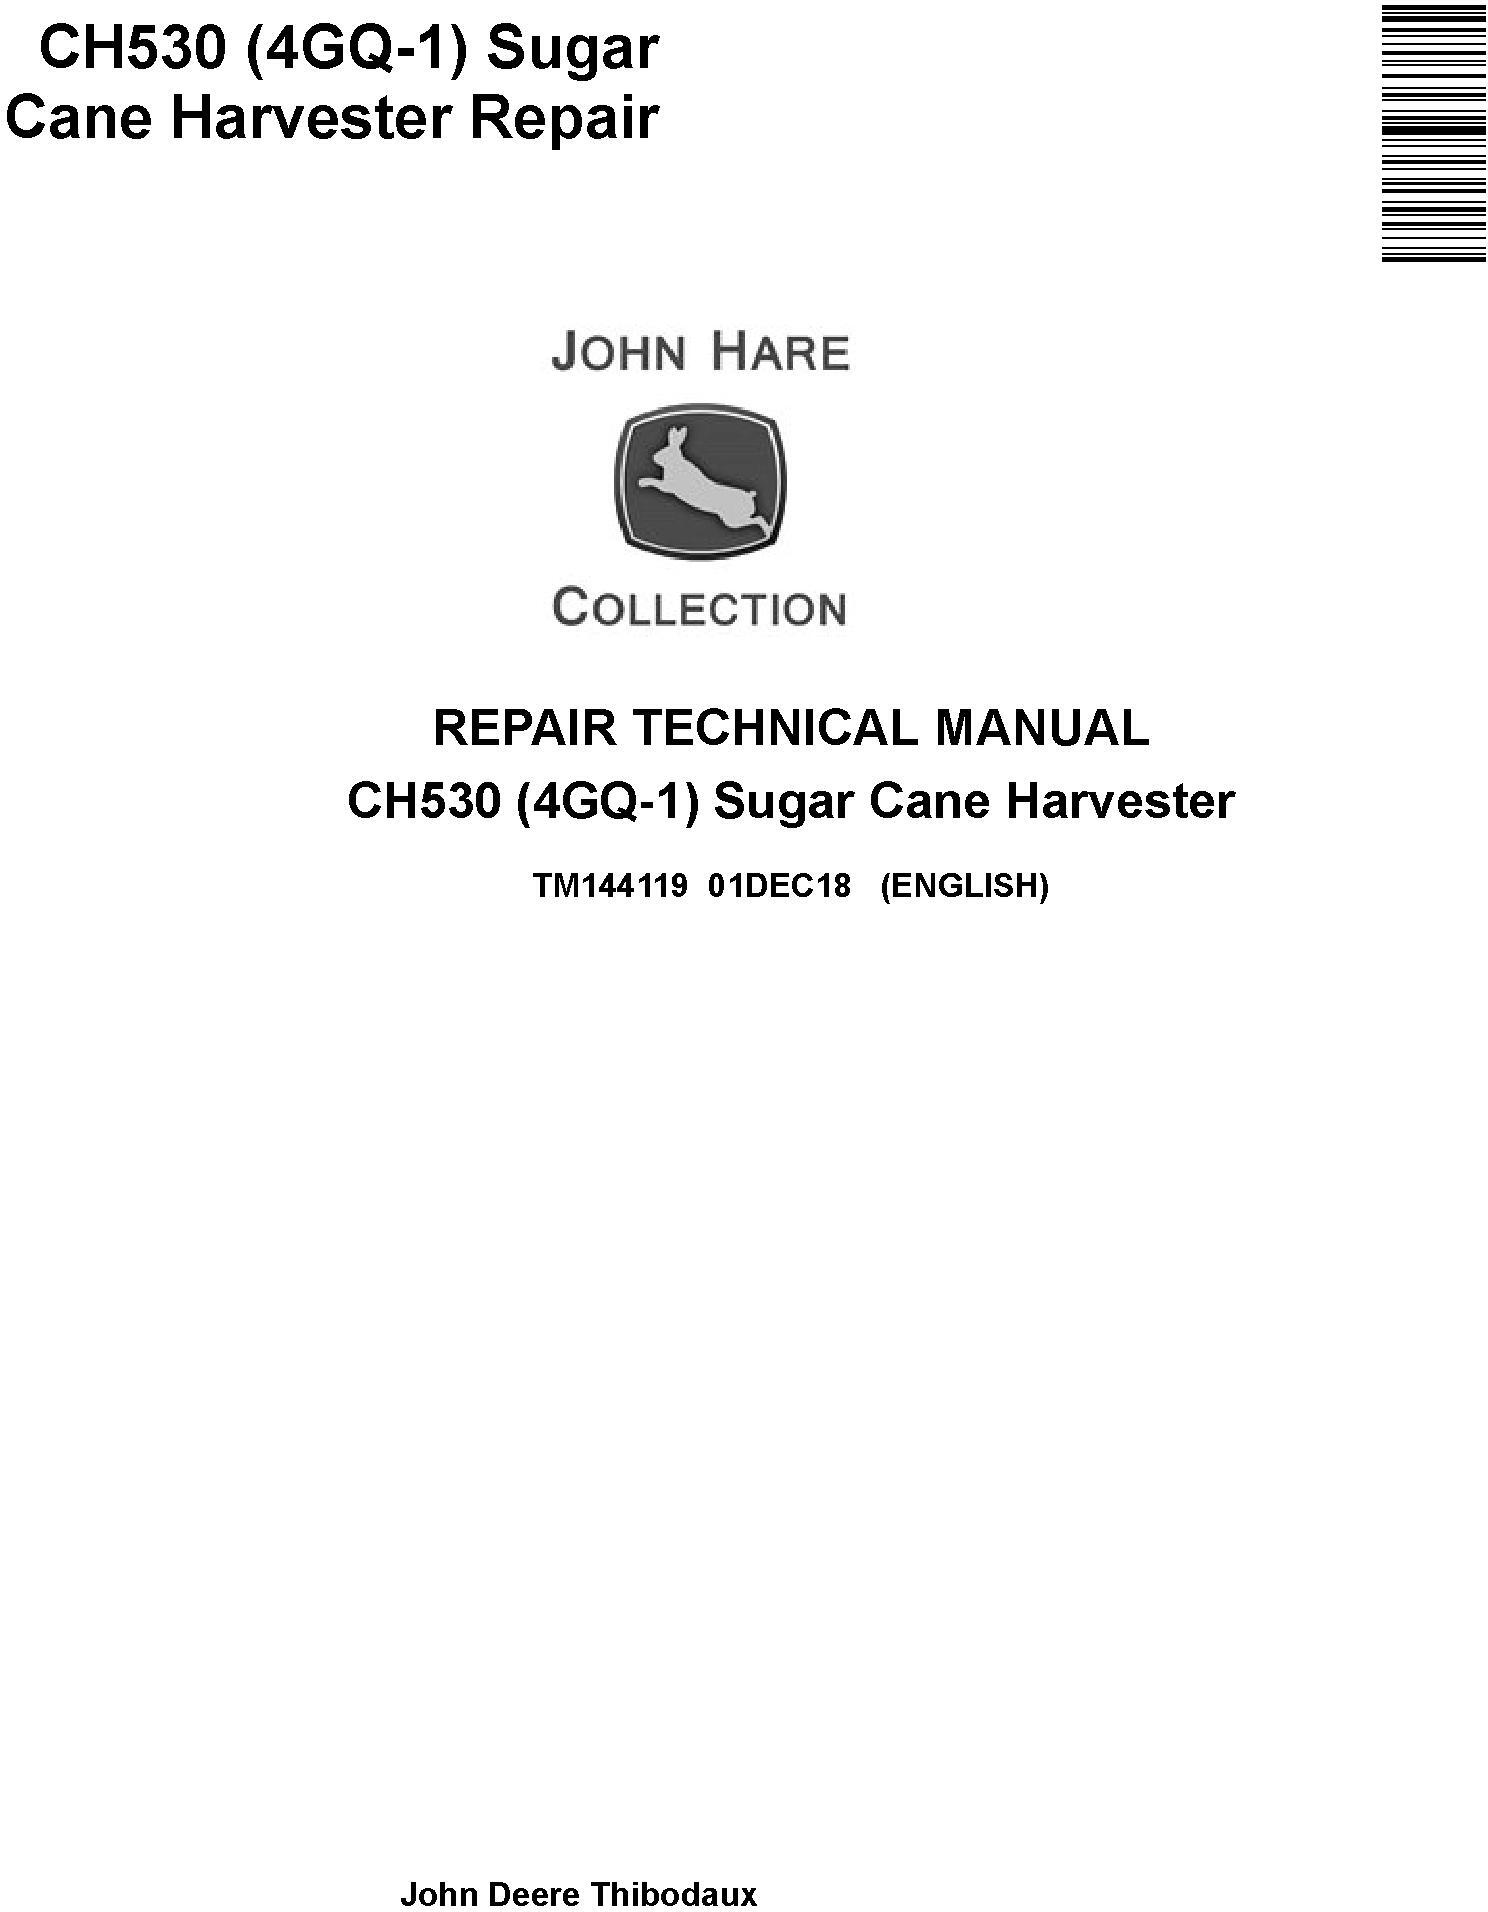 John Deere CH530 (4GQ-1) Sugar Cane Harvester Repair Service Technical Manual (TM144119)